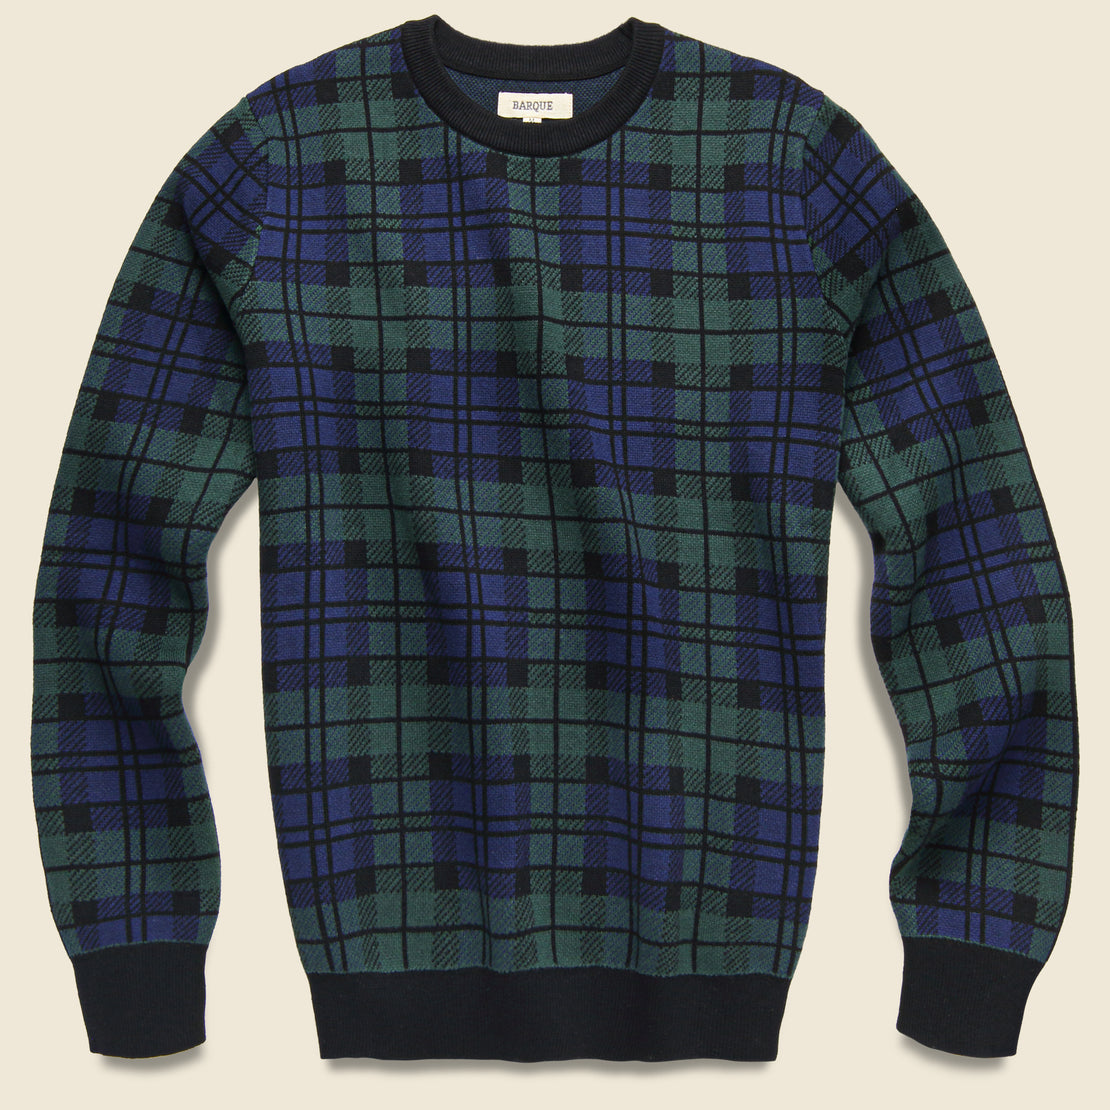 Barque Black Swatch Sweater - Hunter